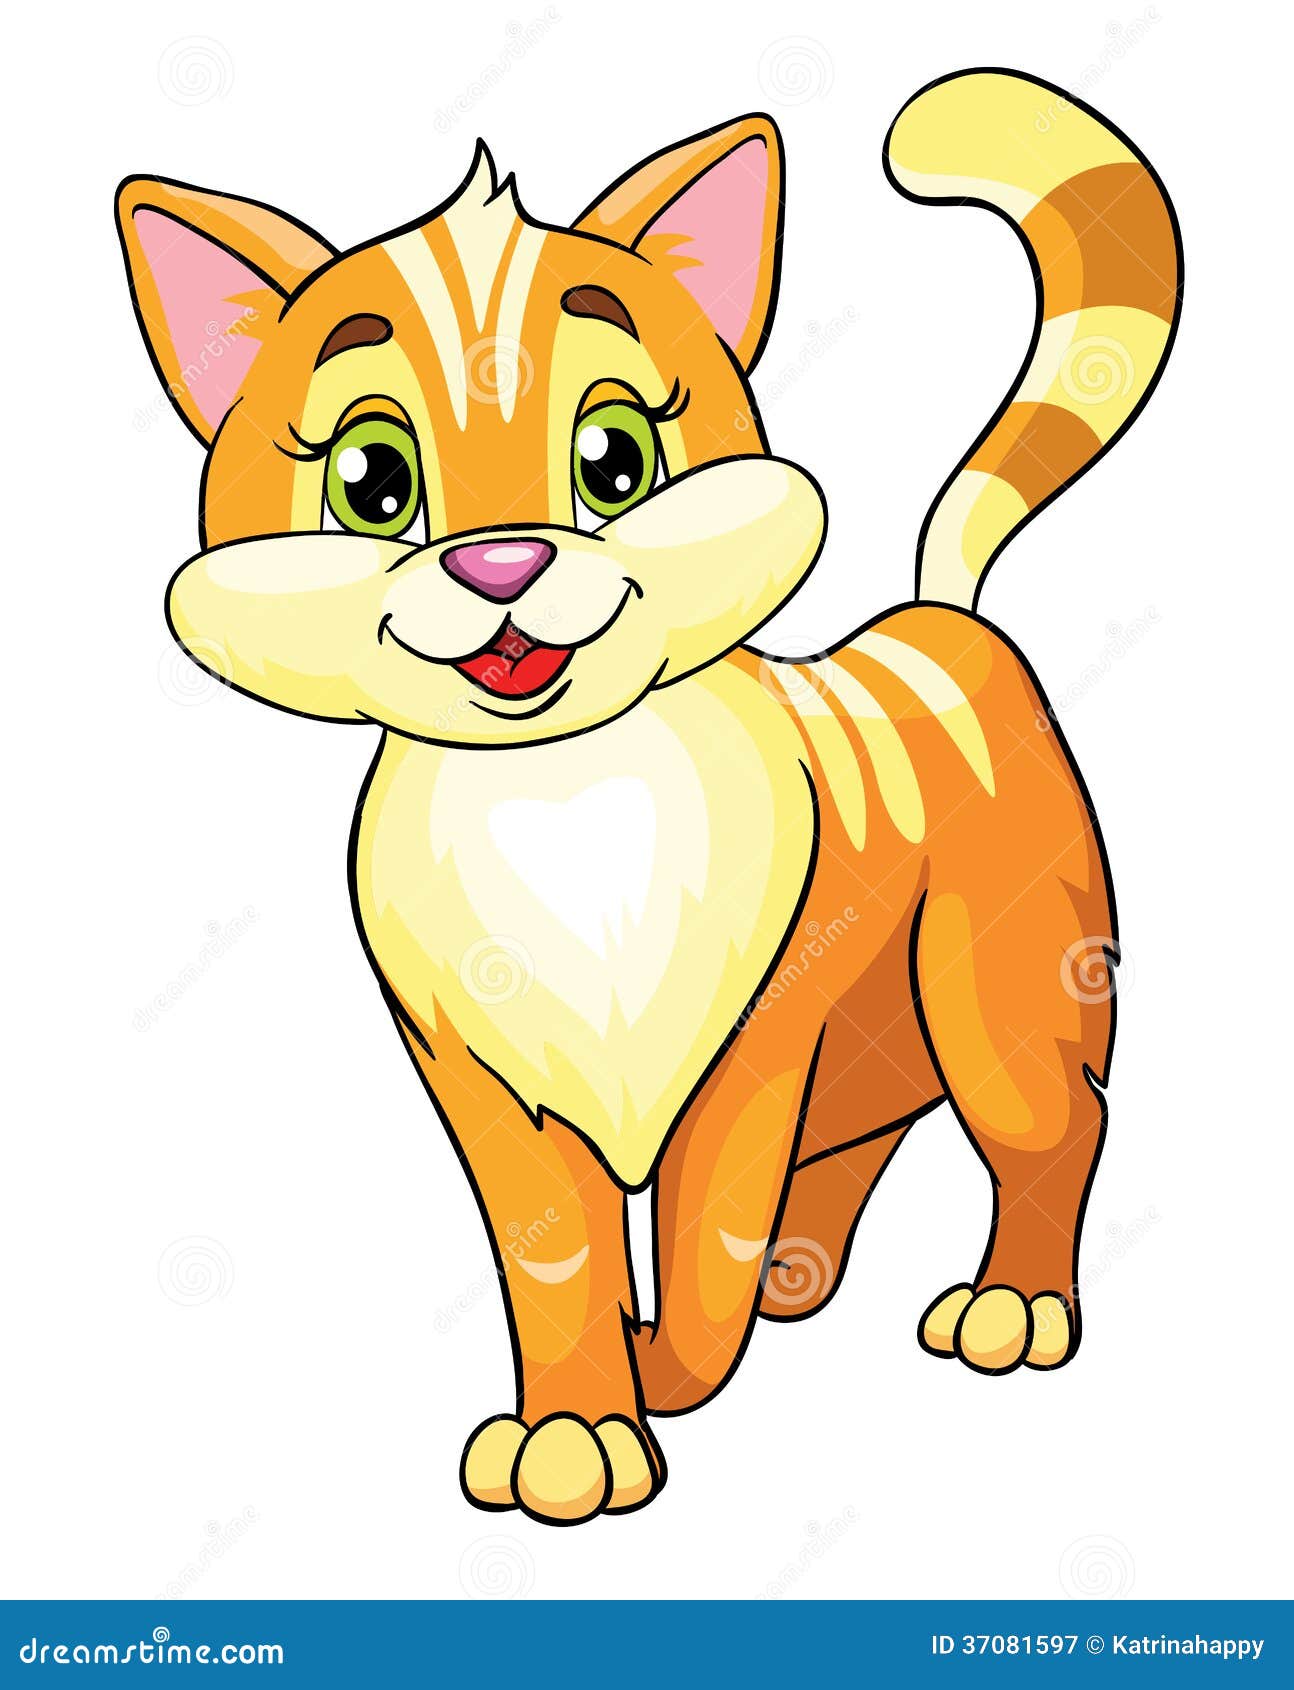 Happy cartoon cat stock illustration. Illustration of white - 37081597